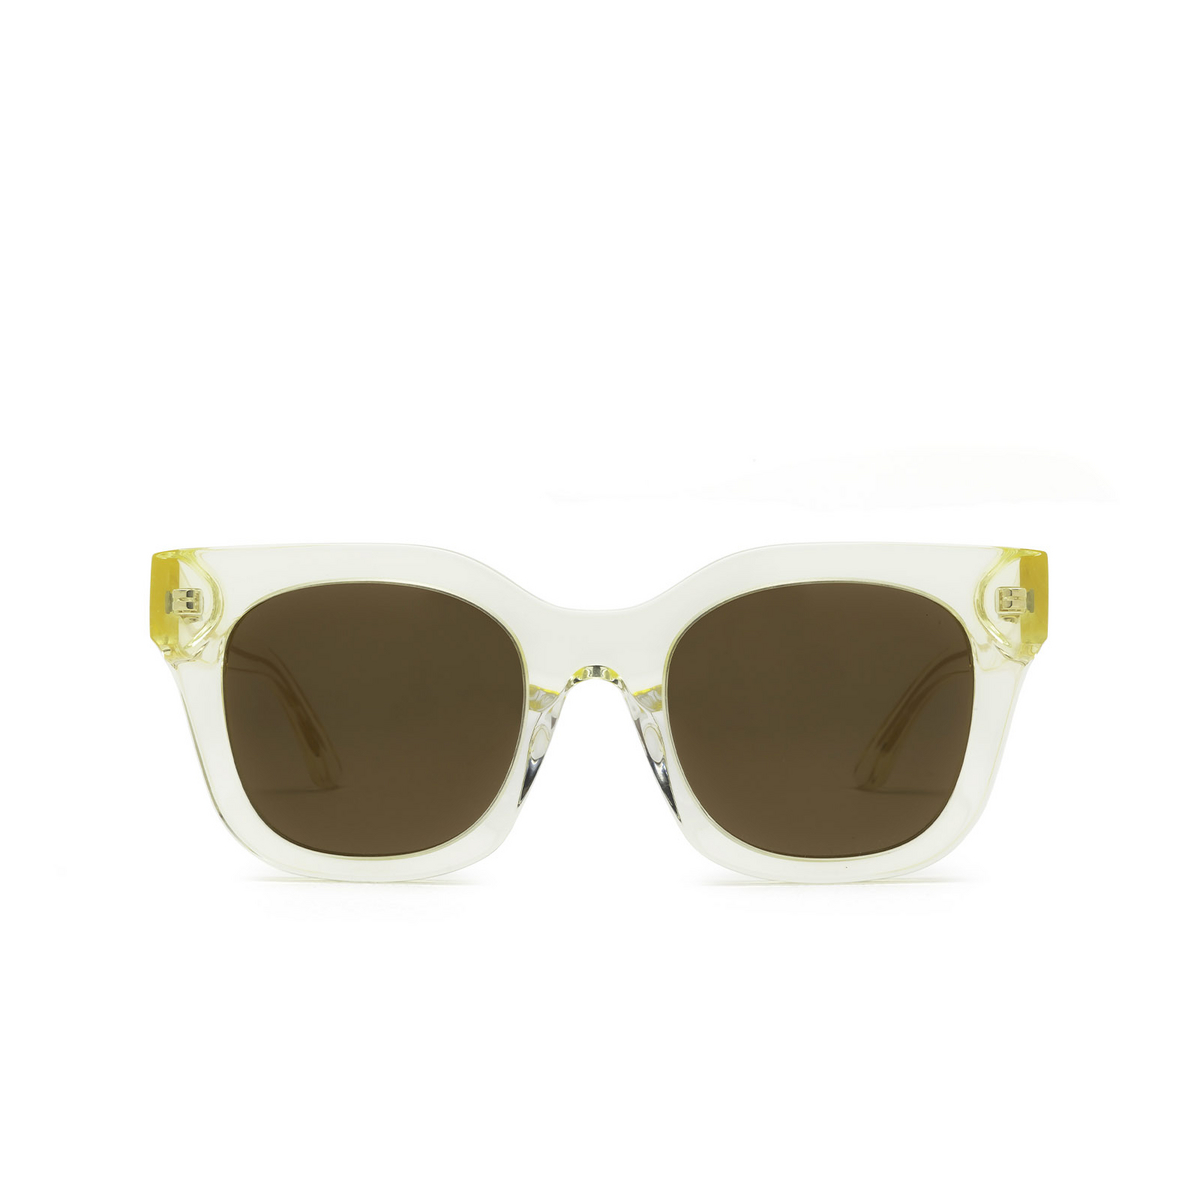 Huma® Square Sunglasses: Blue color Champagne 02 - front view.